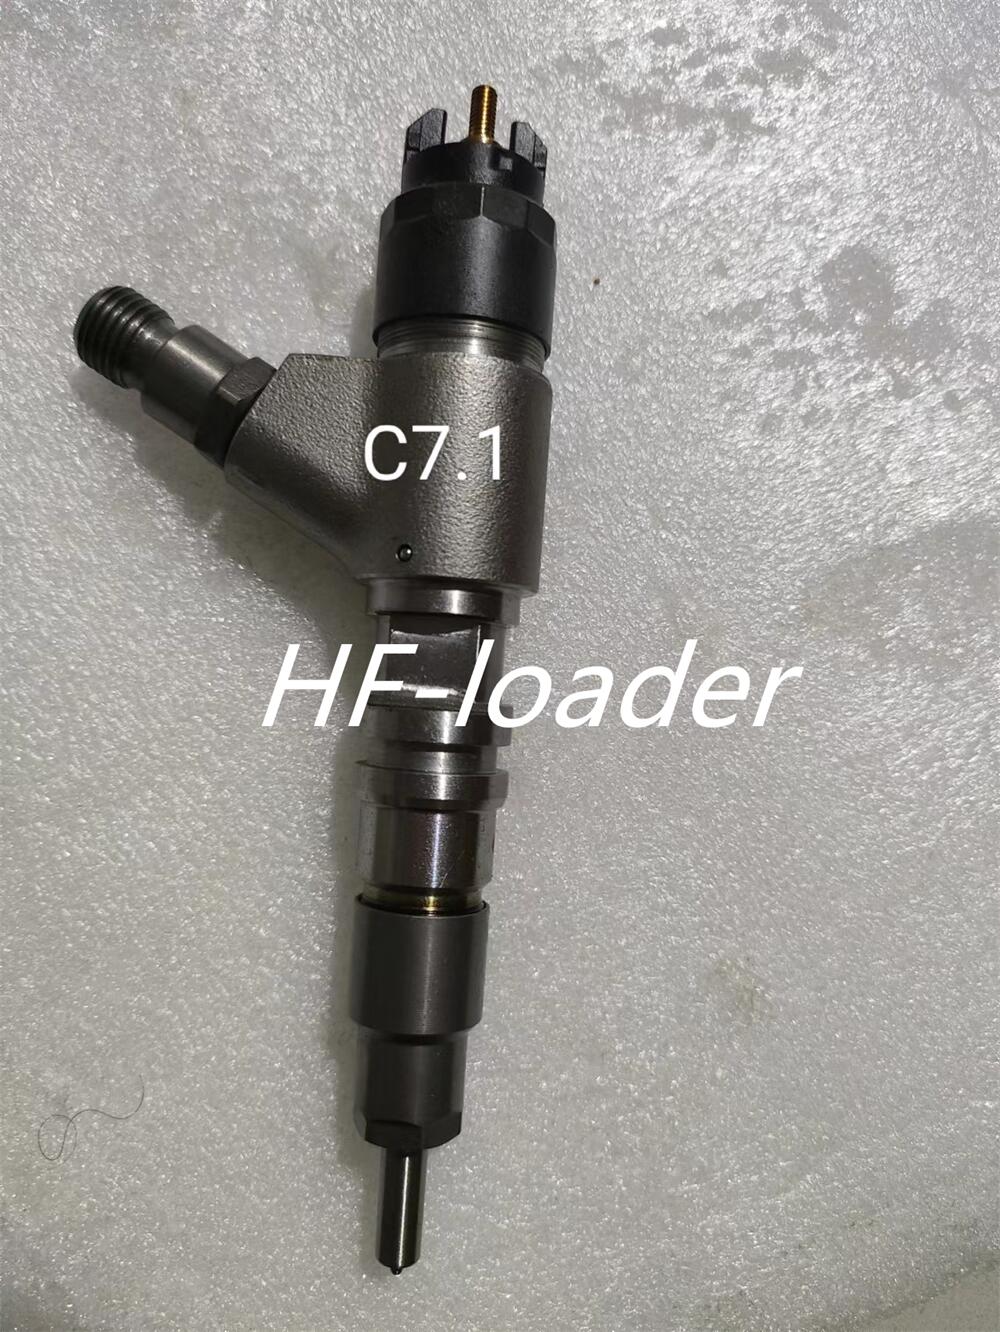 Diesel Engine Injector for Caterpillar C7.1